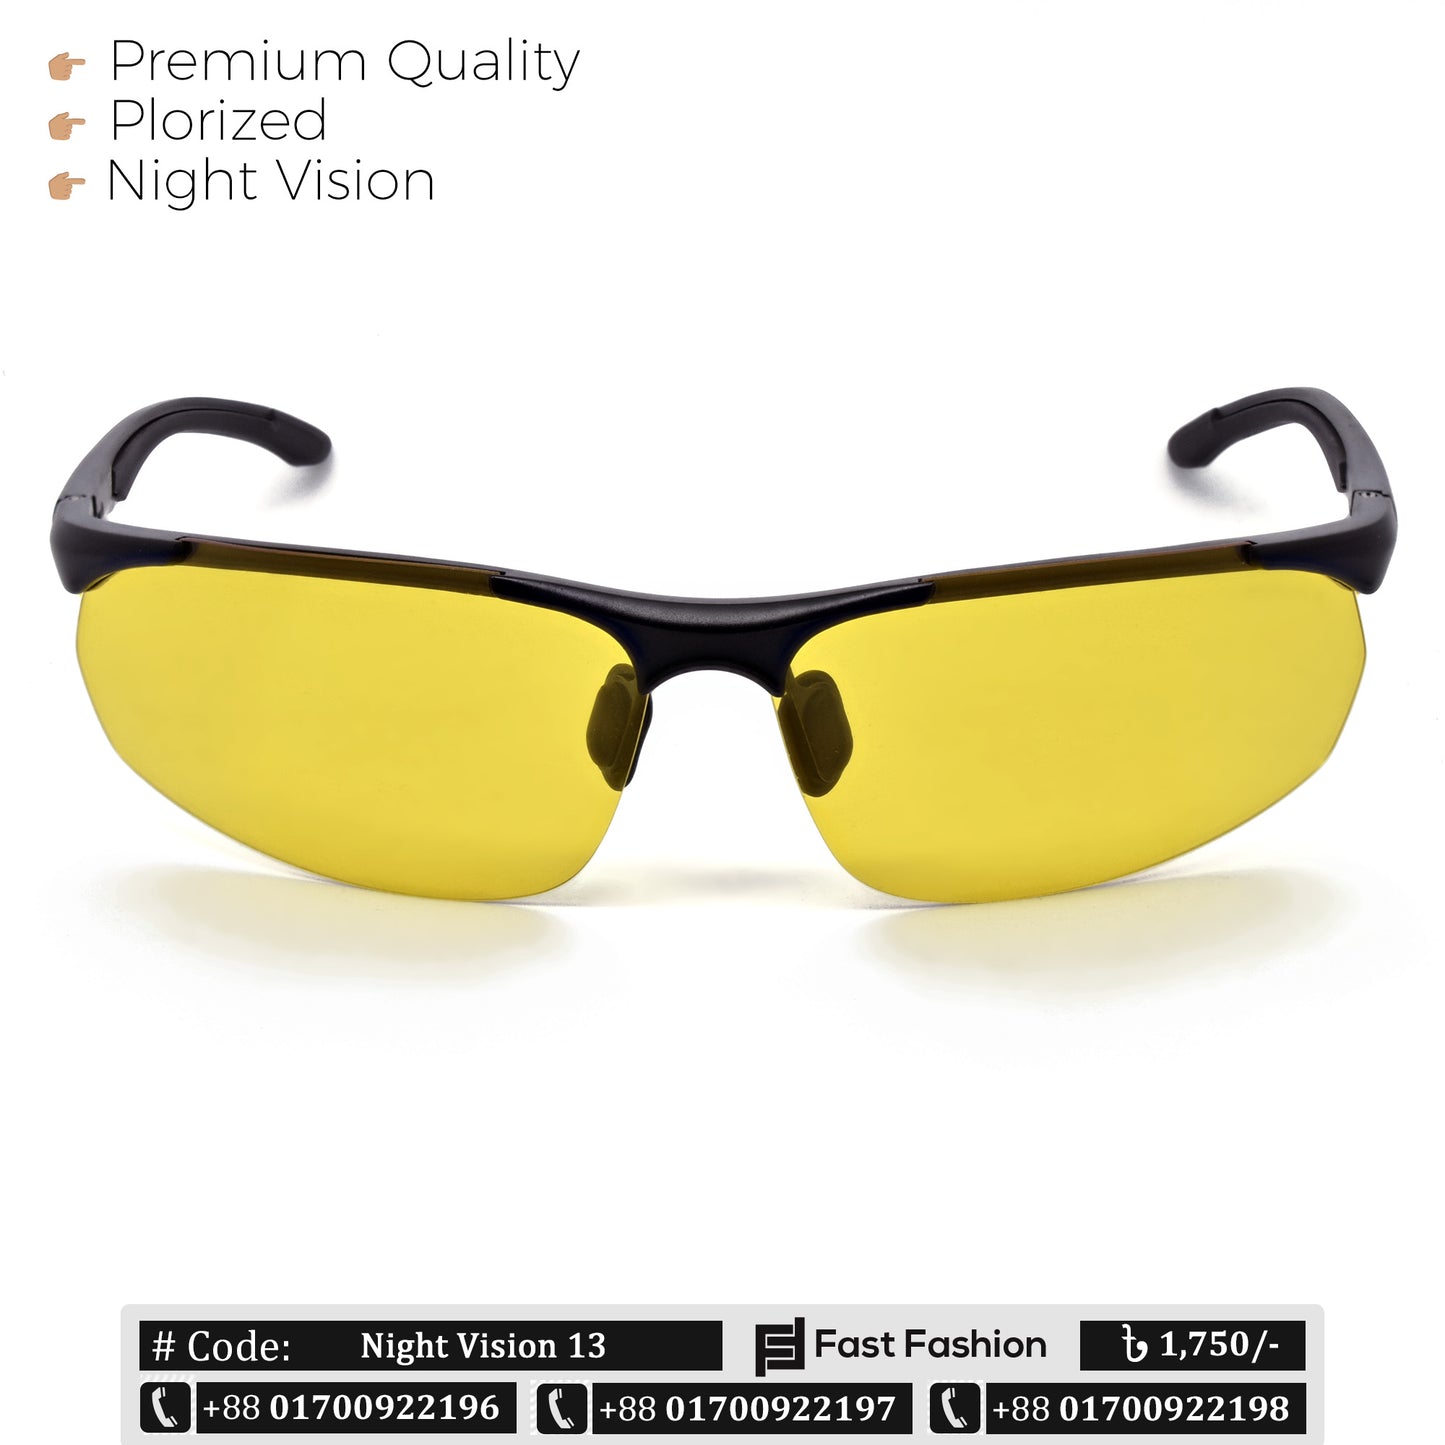 Premium Quality Polish Style Night Vision Sunglass for Men | Night Vision 13